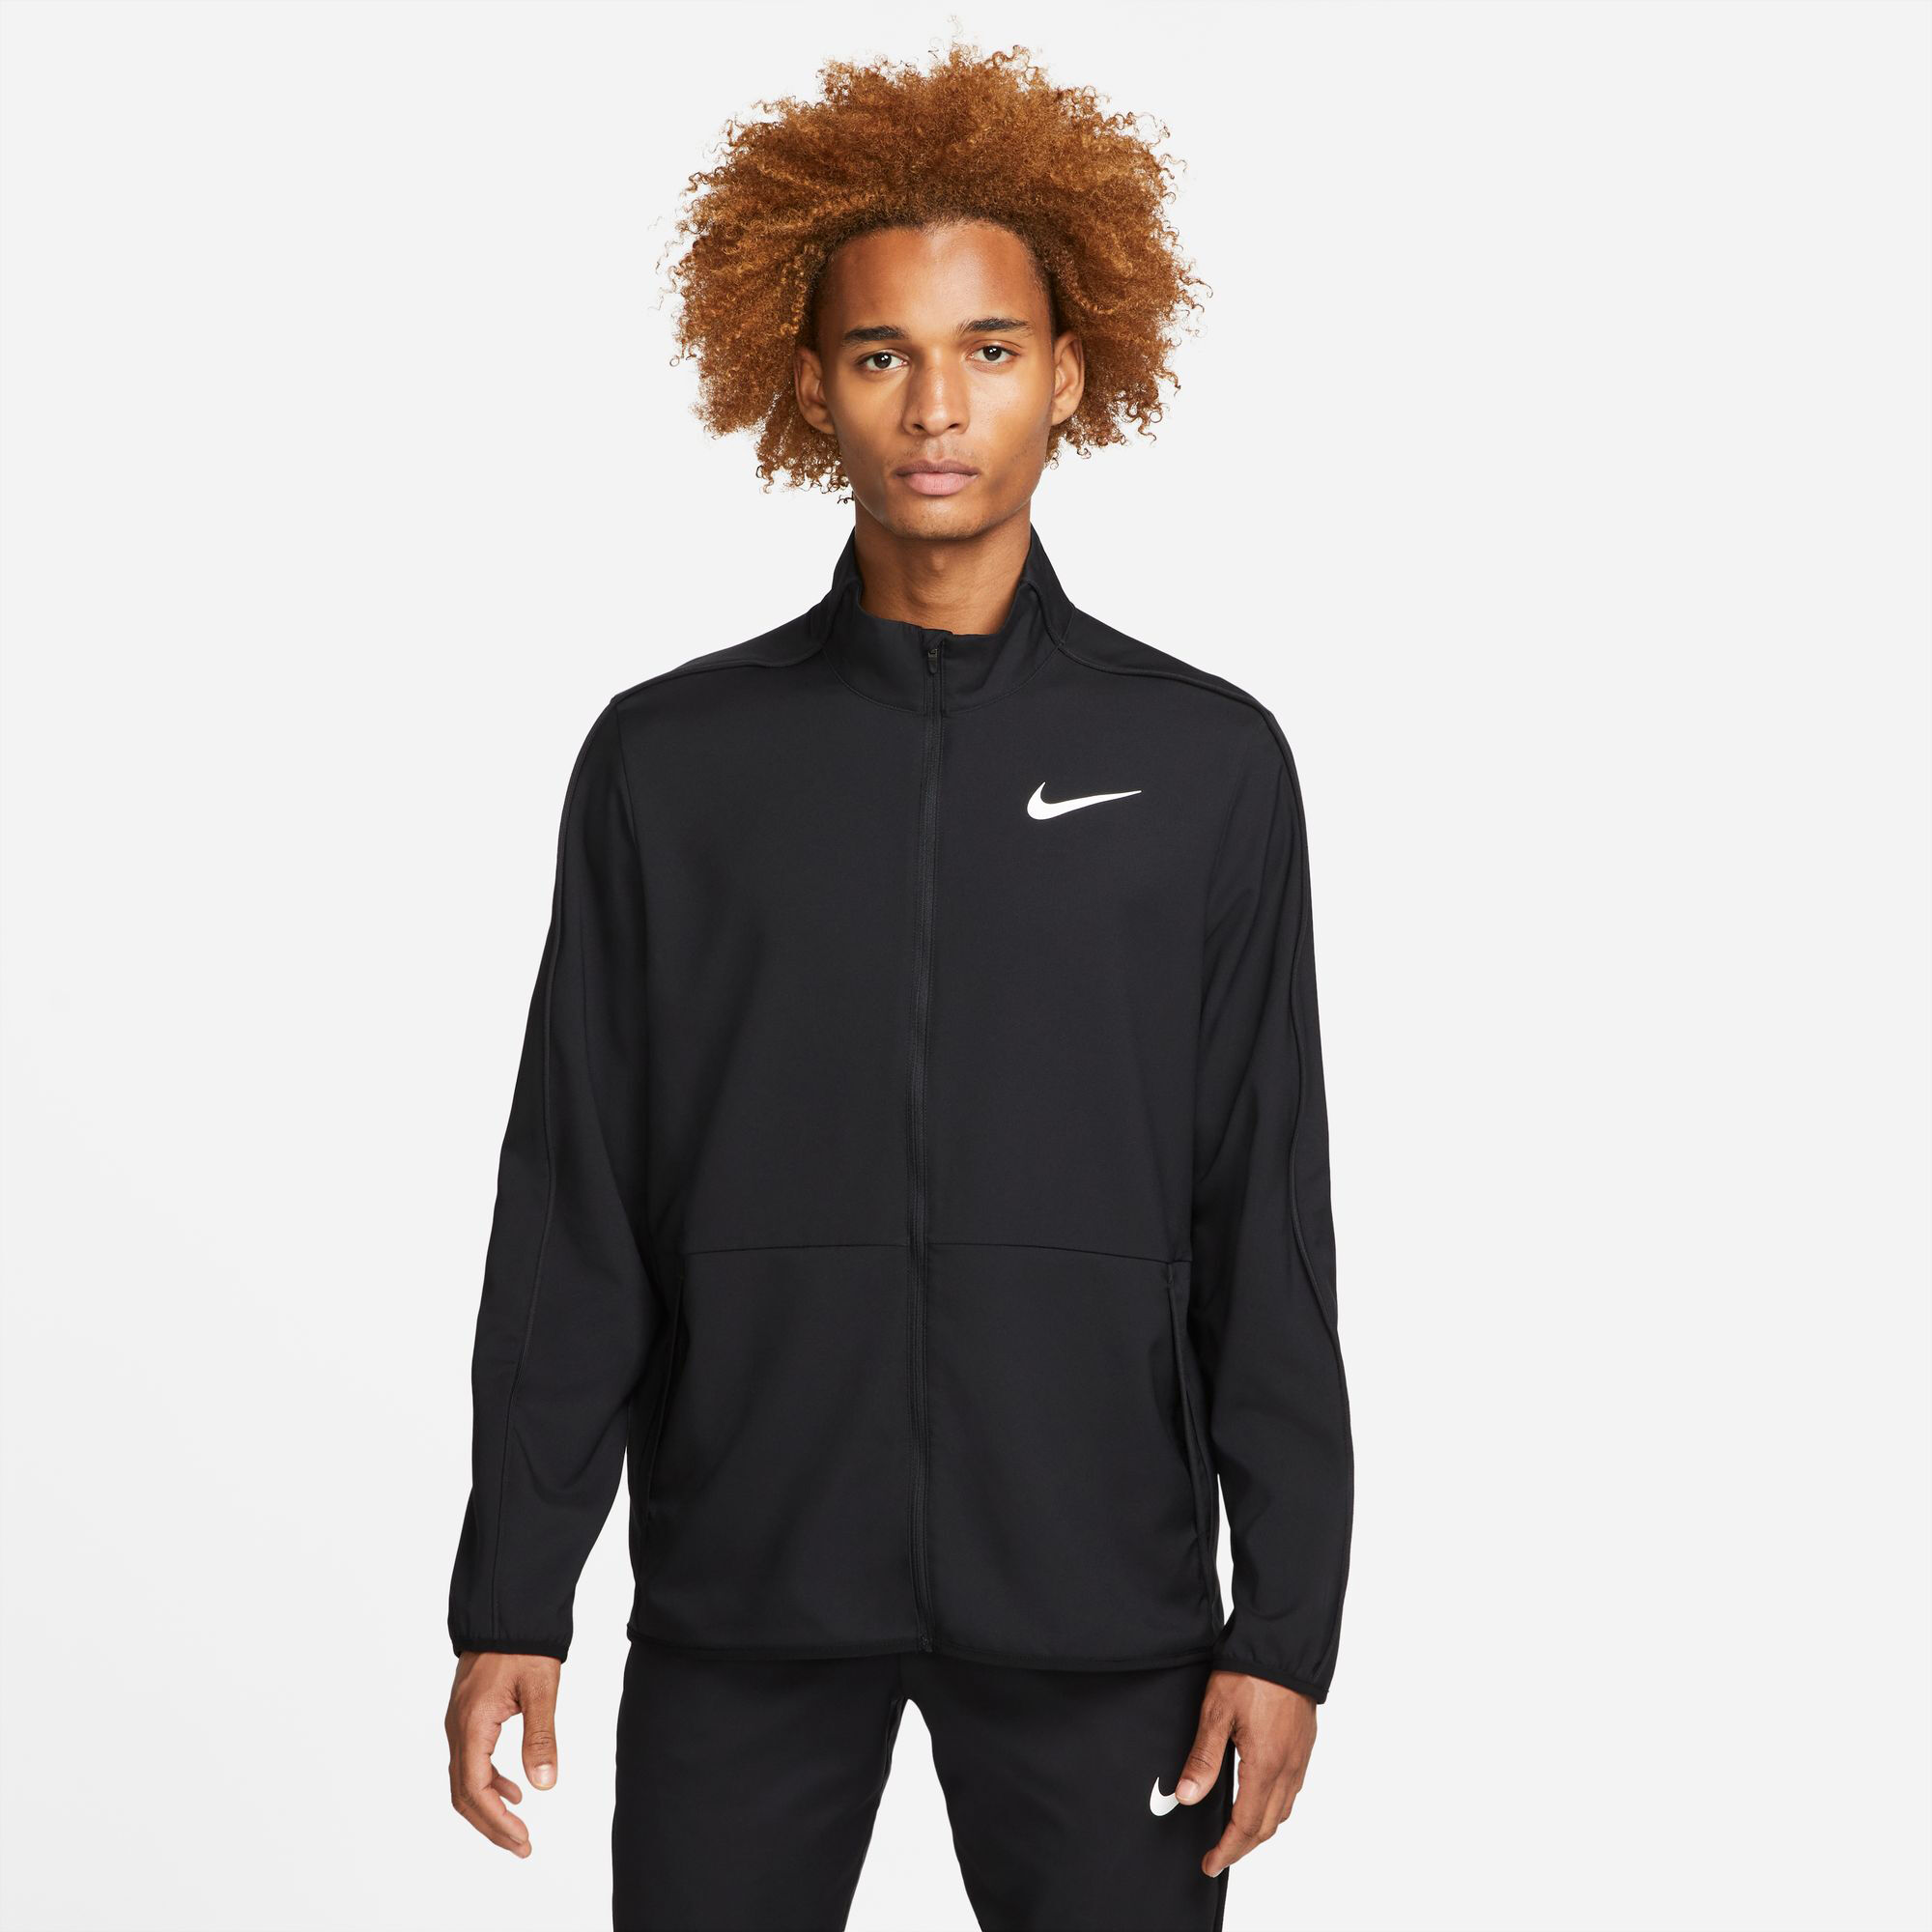 Buy Nike Dri-Fit Team Woven Training Jacket Men Black online